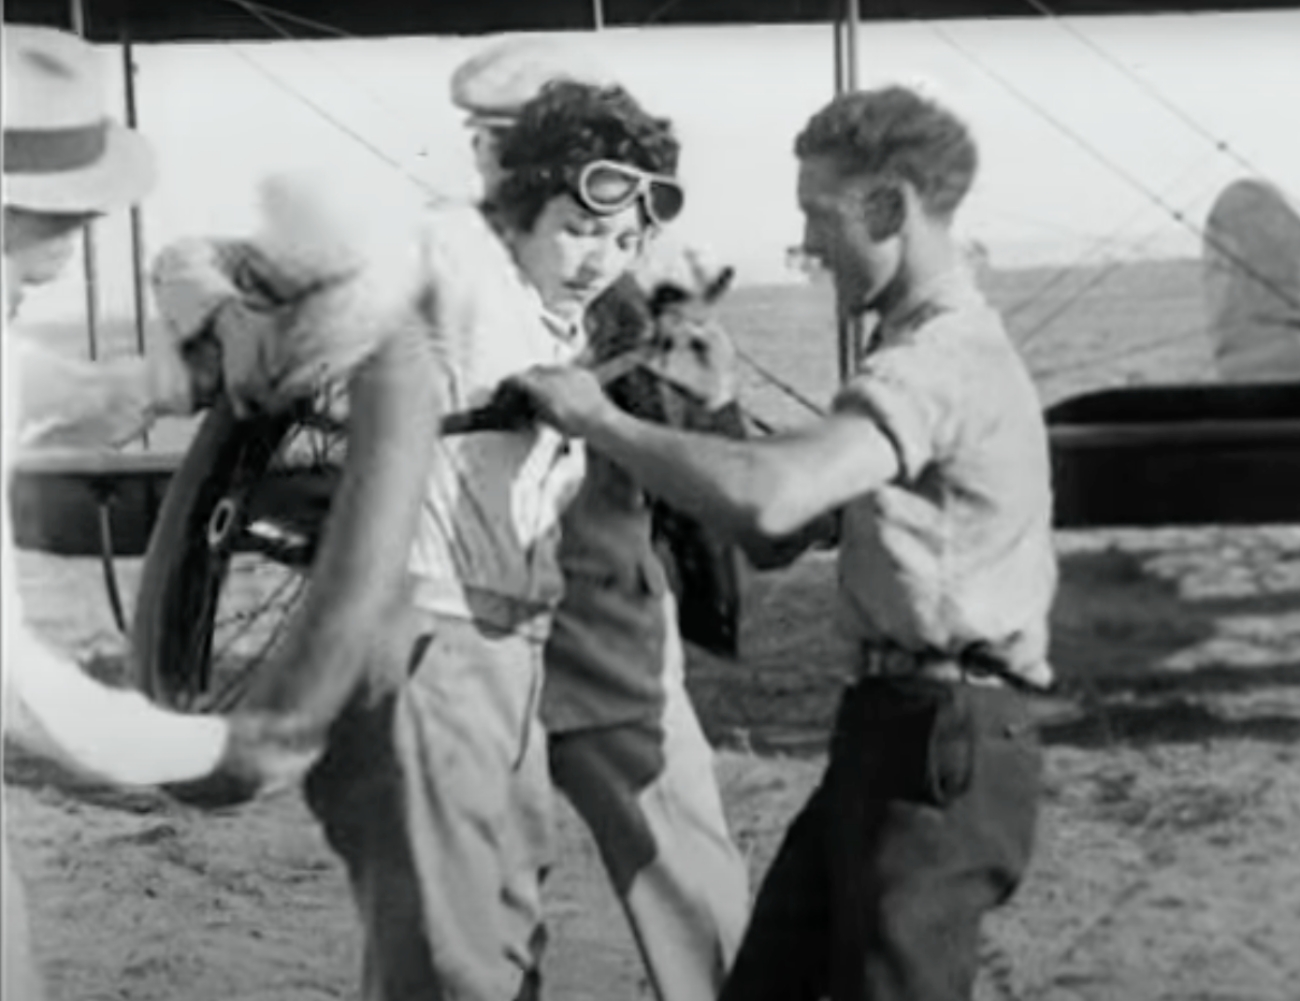 Gladys Ingle preparing to jump between planes 1920s